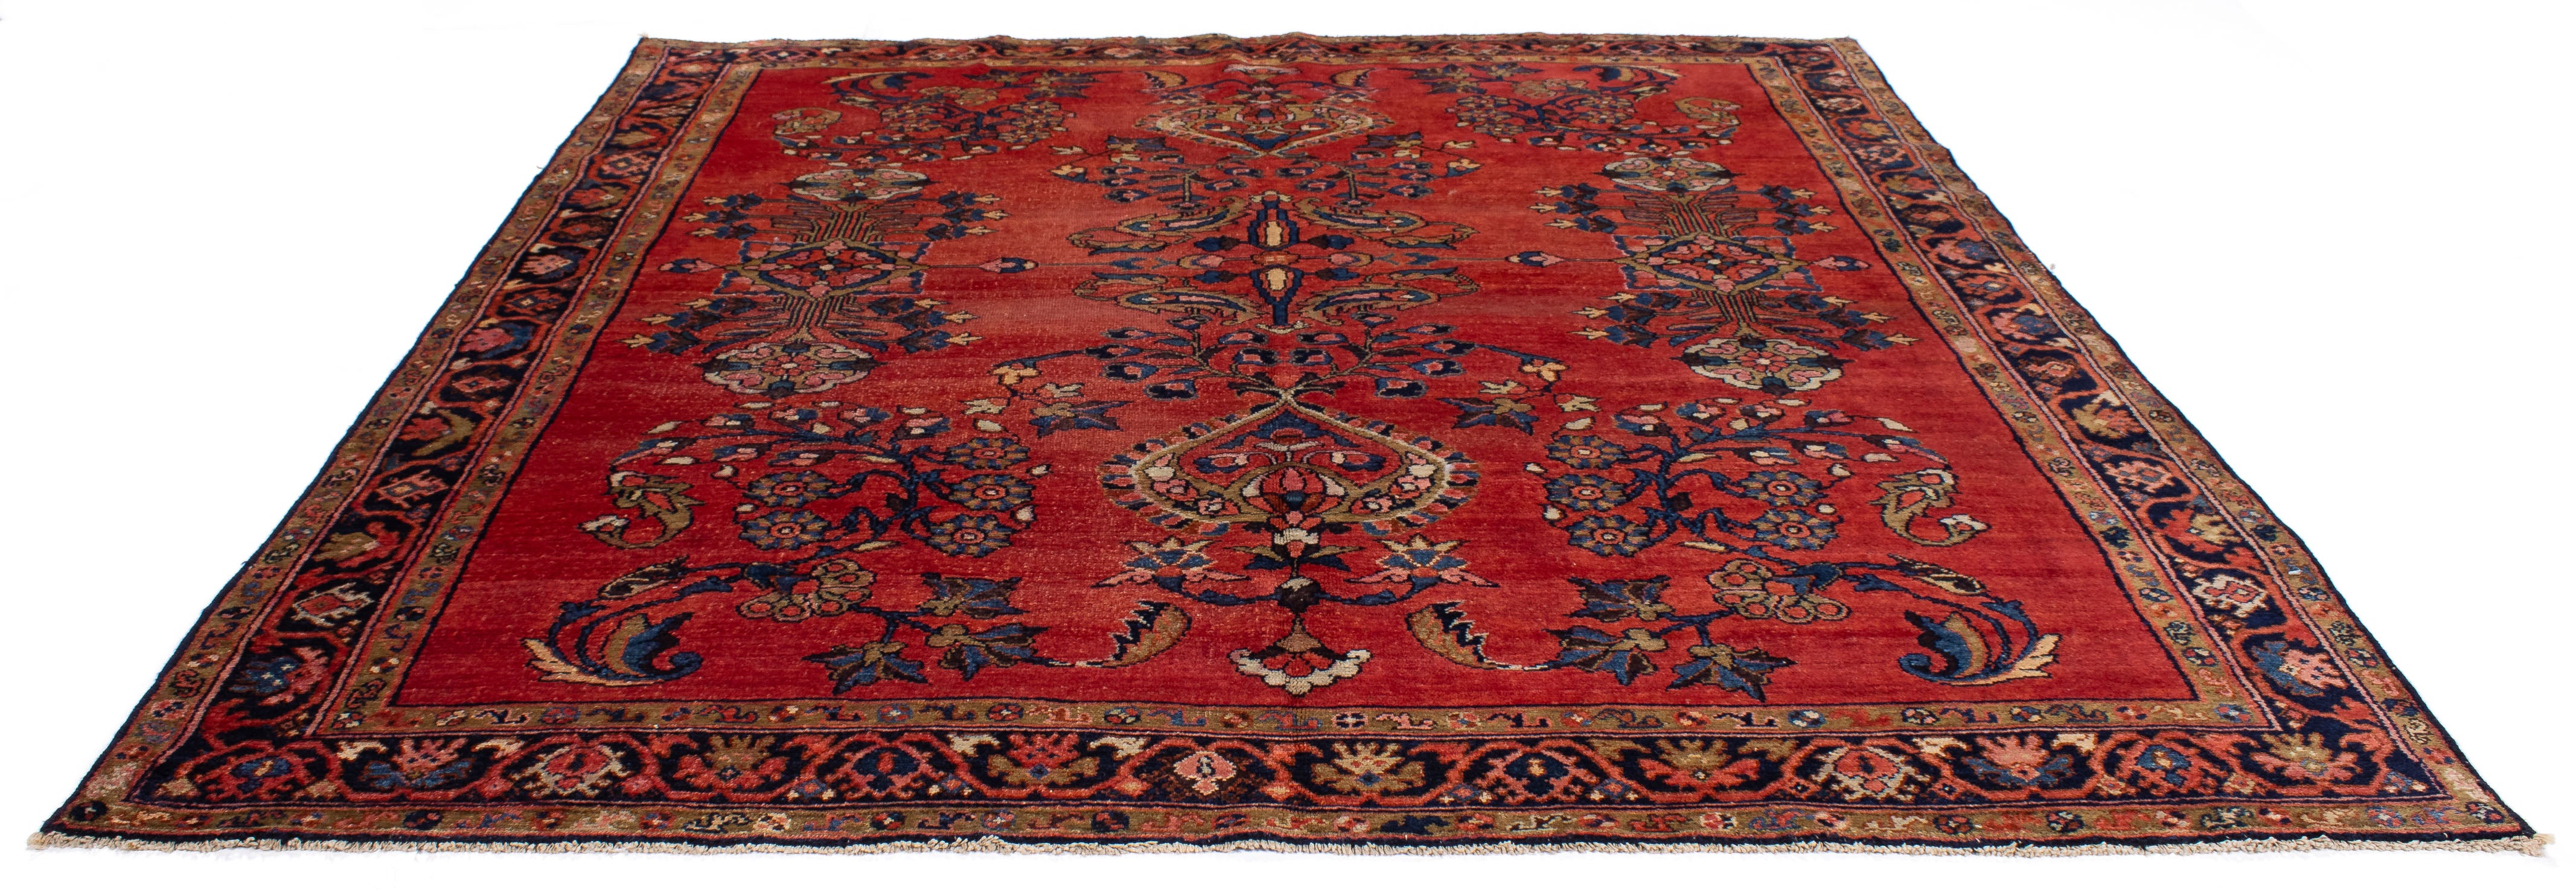 Antique Persian Lillihan Rug <br> 5'6 x 6'1